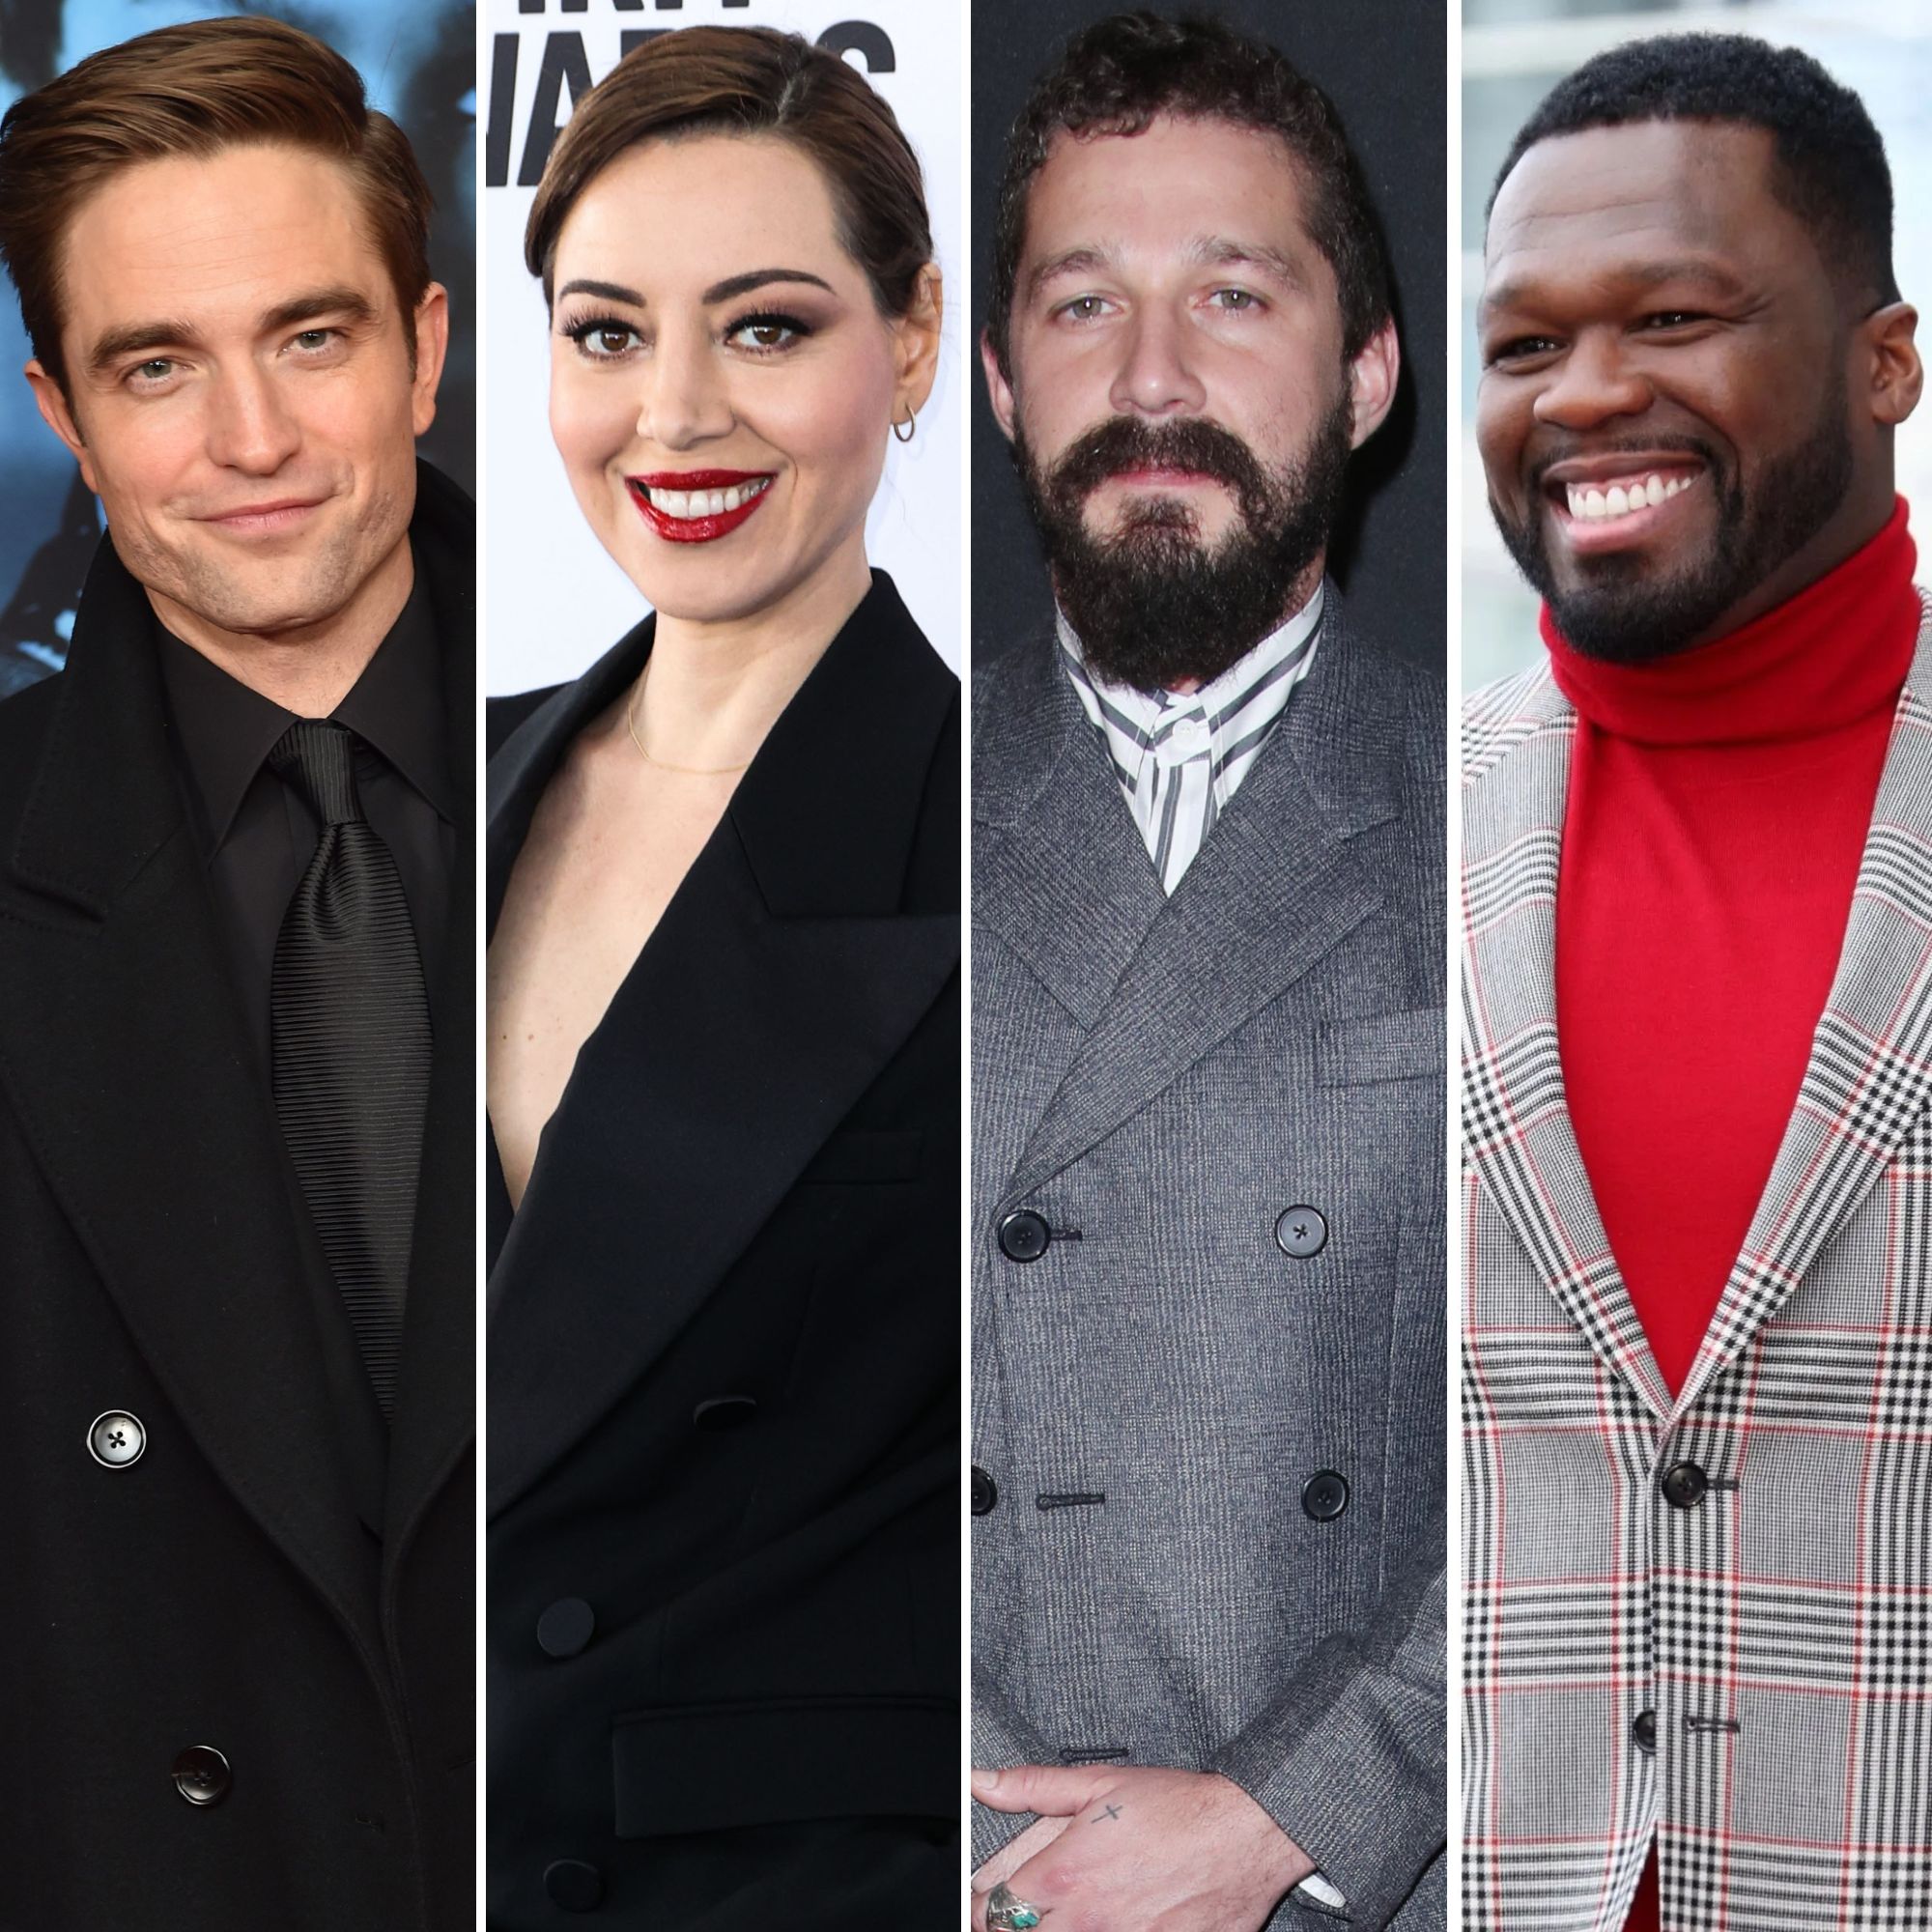 Teen Stars Jerking Off - Celebrities Who Had Sex on Screen: 50 Cent, Robert Pattinson